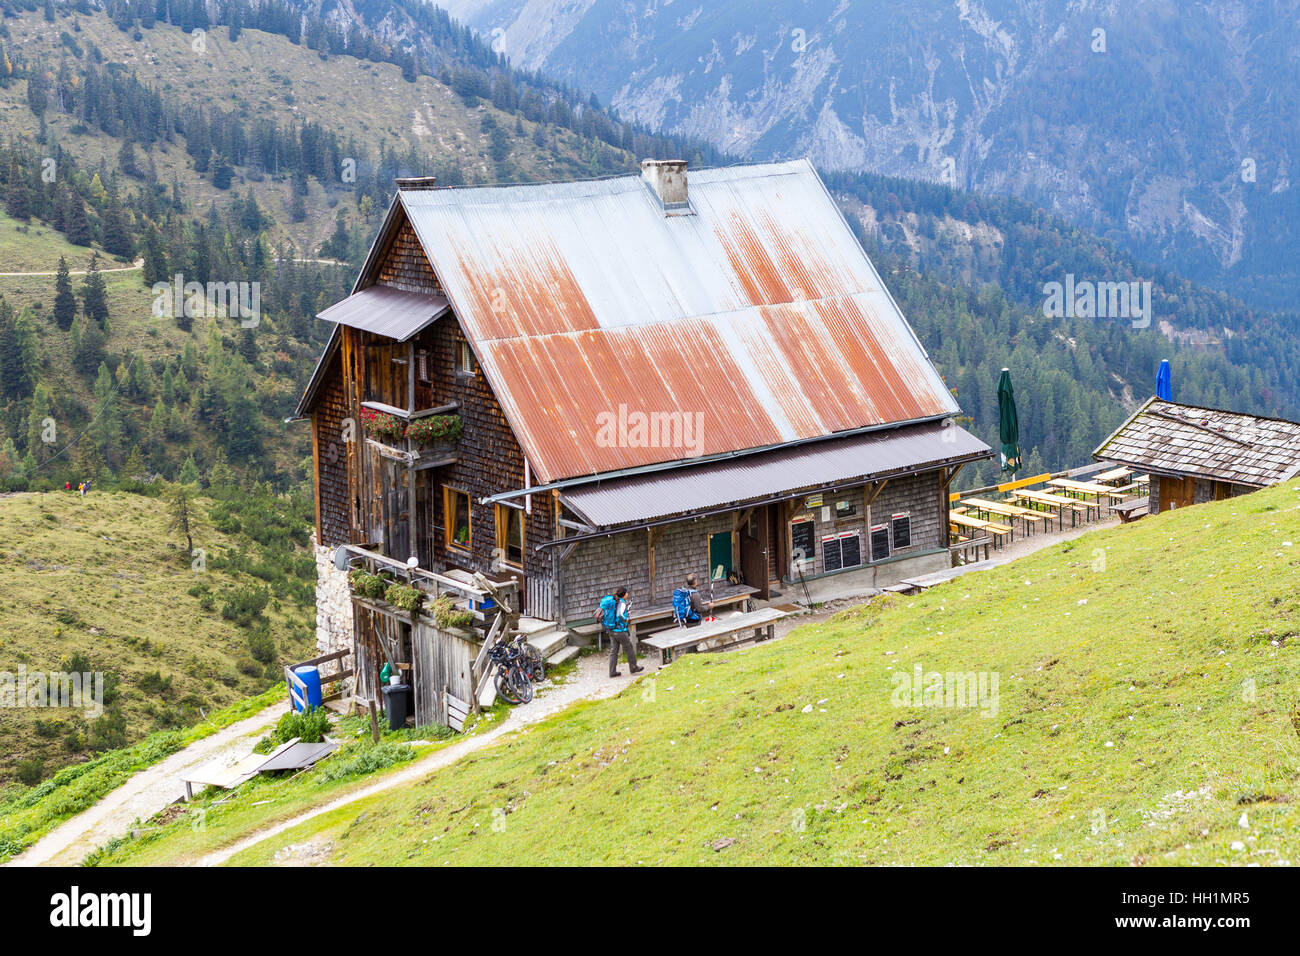 Eng Plumsjoch et dans les montagnes du Karwendel Banque D'Images